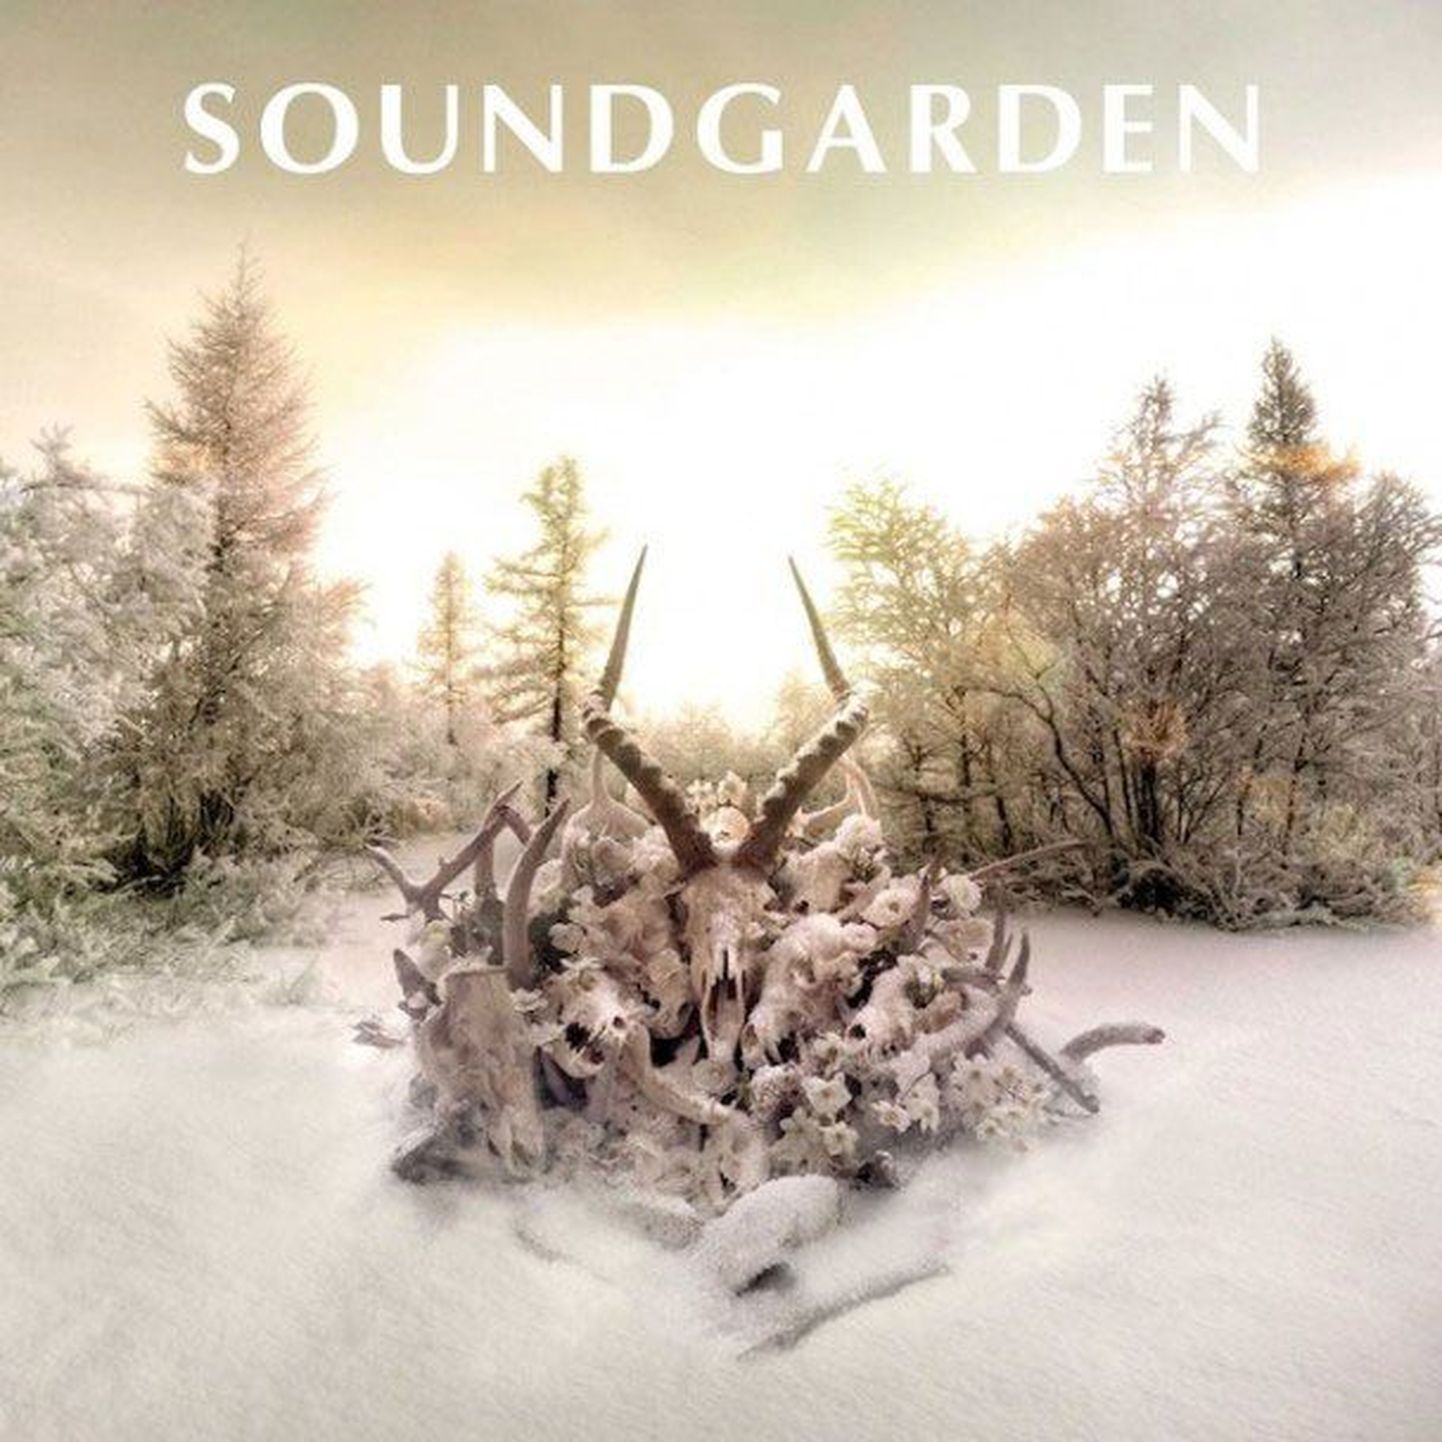 Soundgarden
King Animal 
(Mercury)